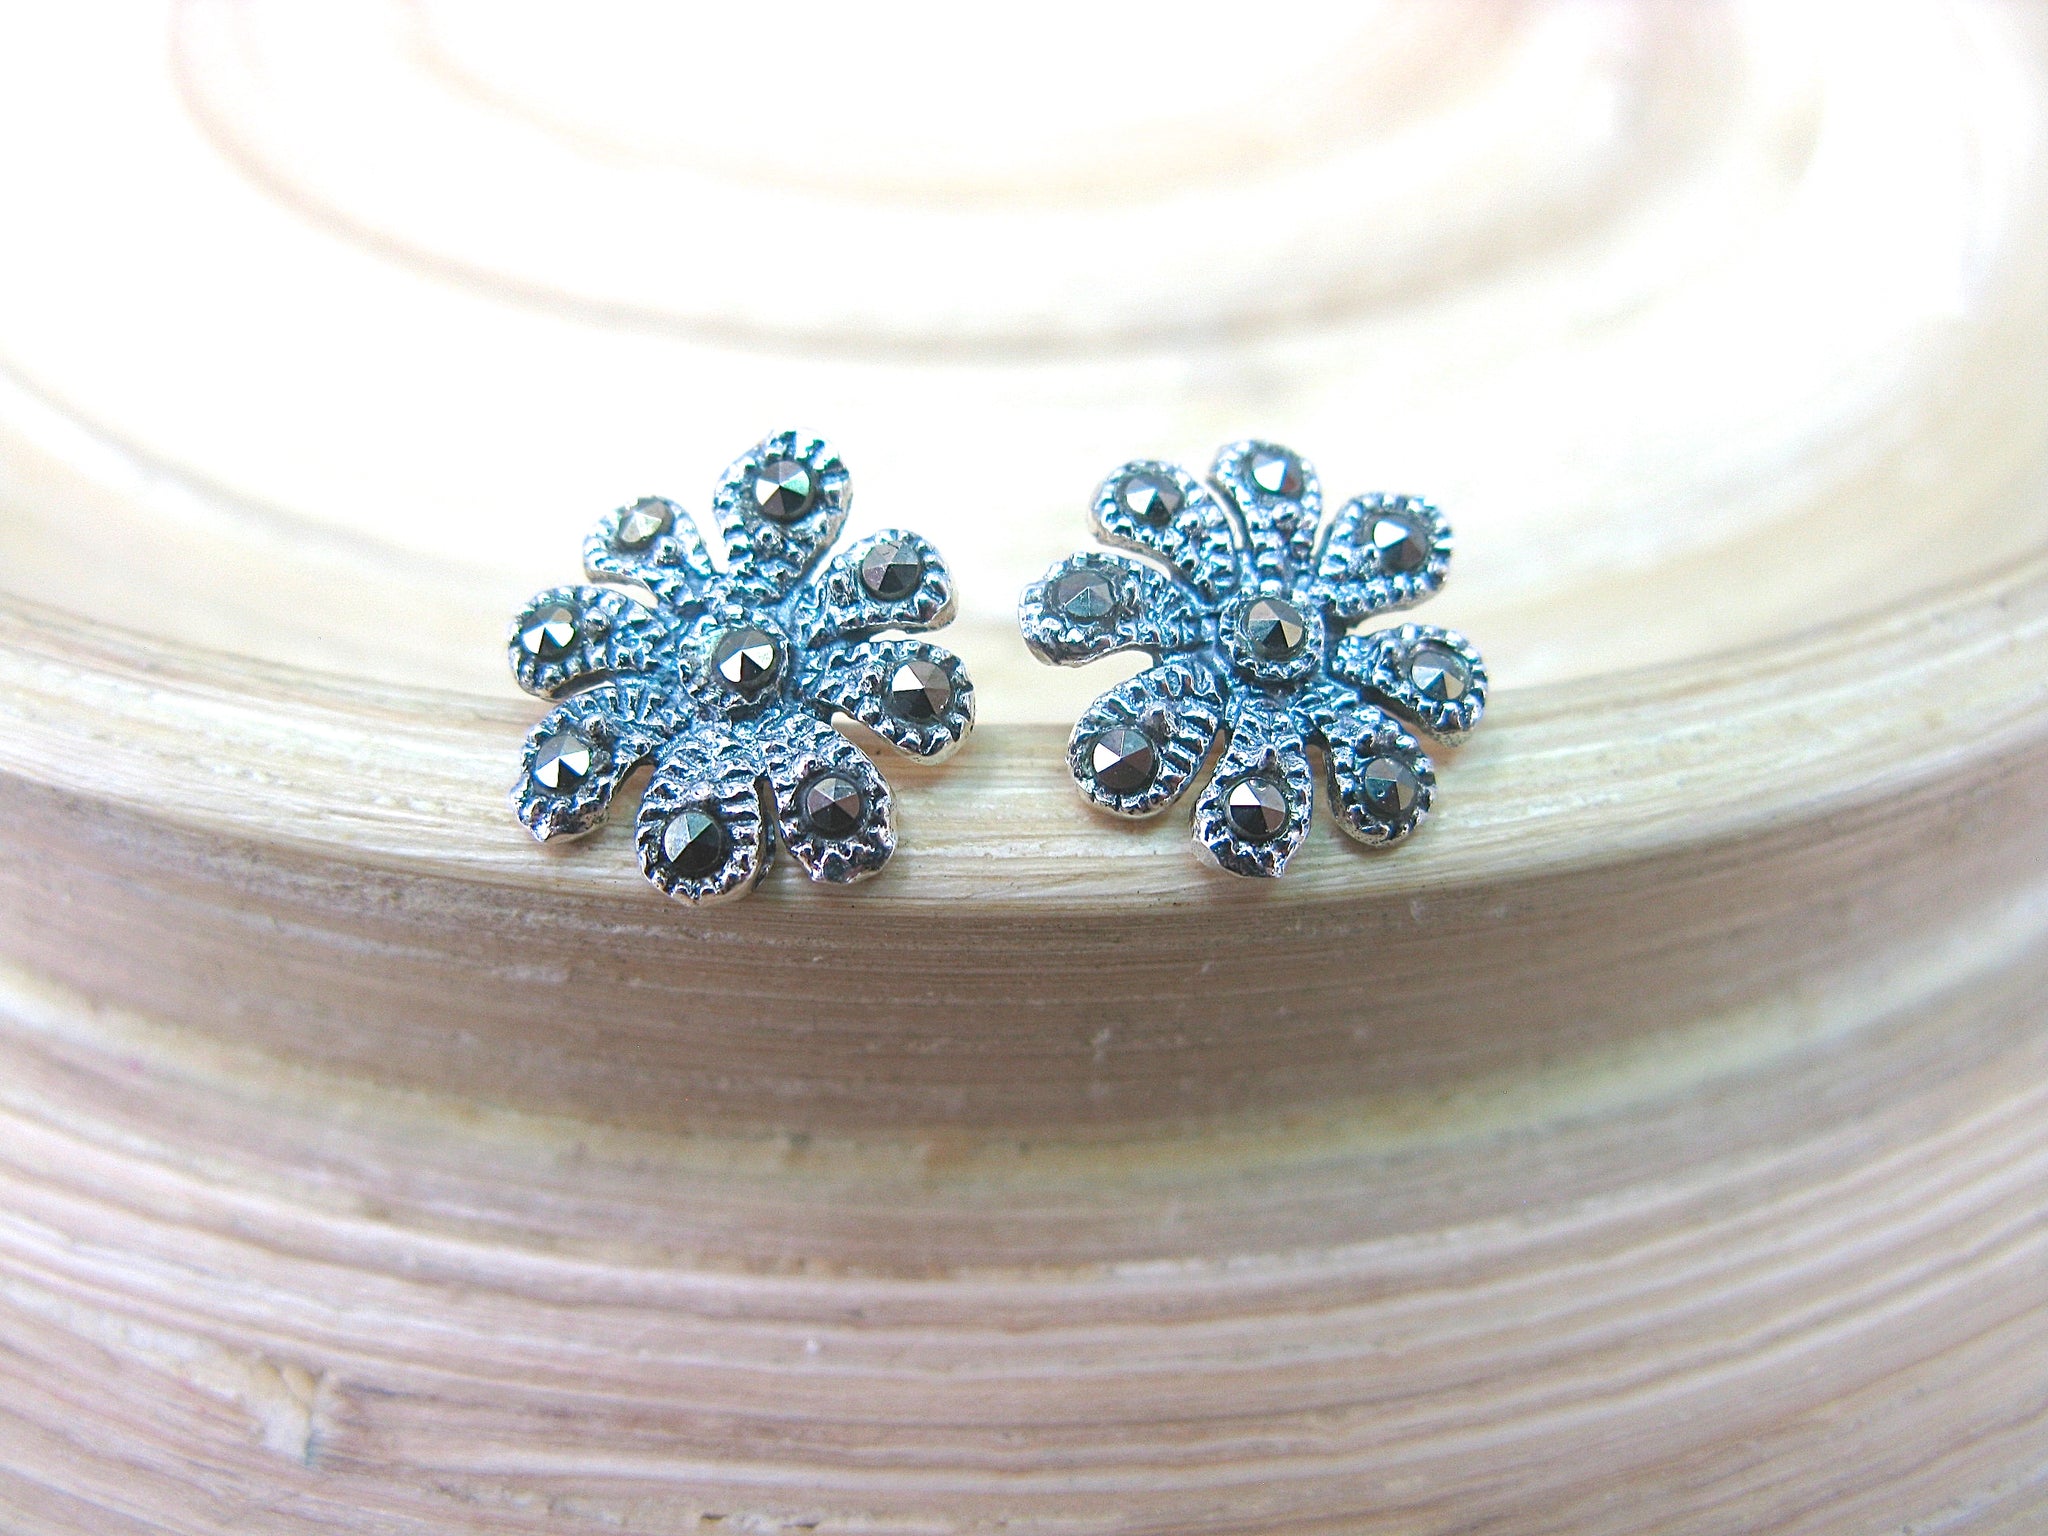 Flower Marcasite Stud Earrings in 925 Sterling Silver